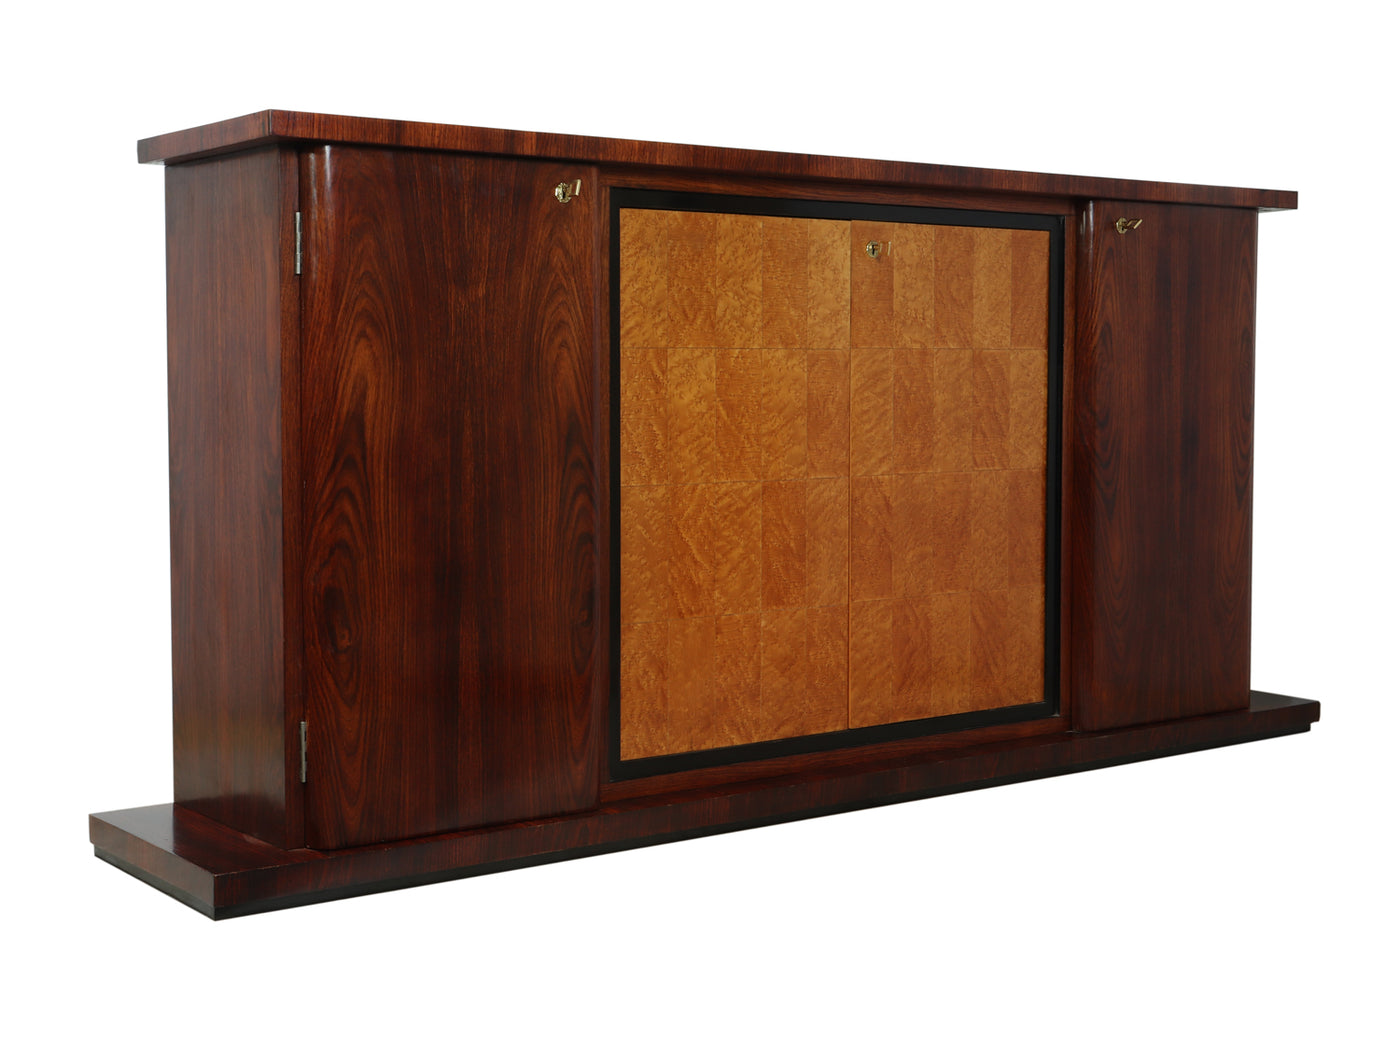 Italian Art Deco Sideboard in Rosewood and Birdseye Maple